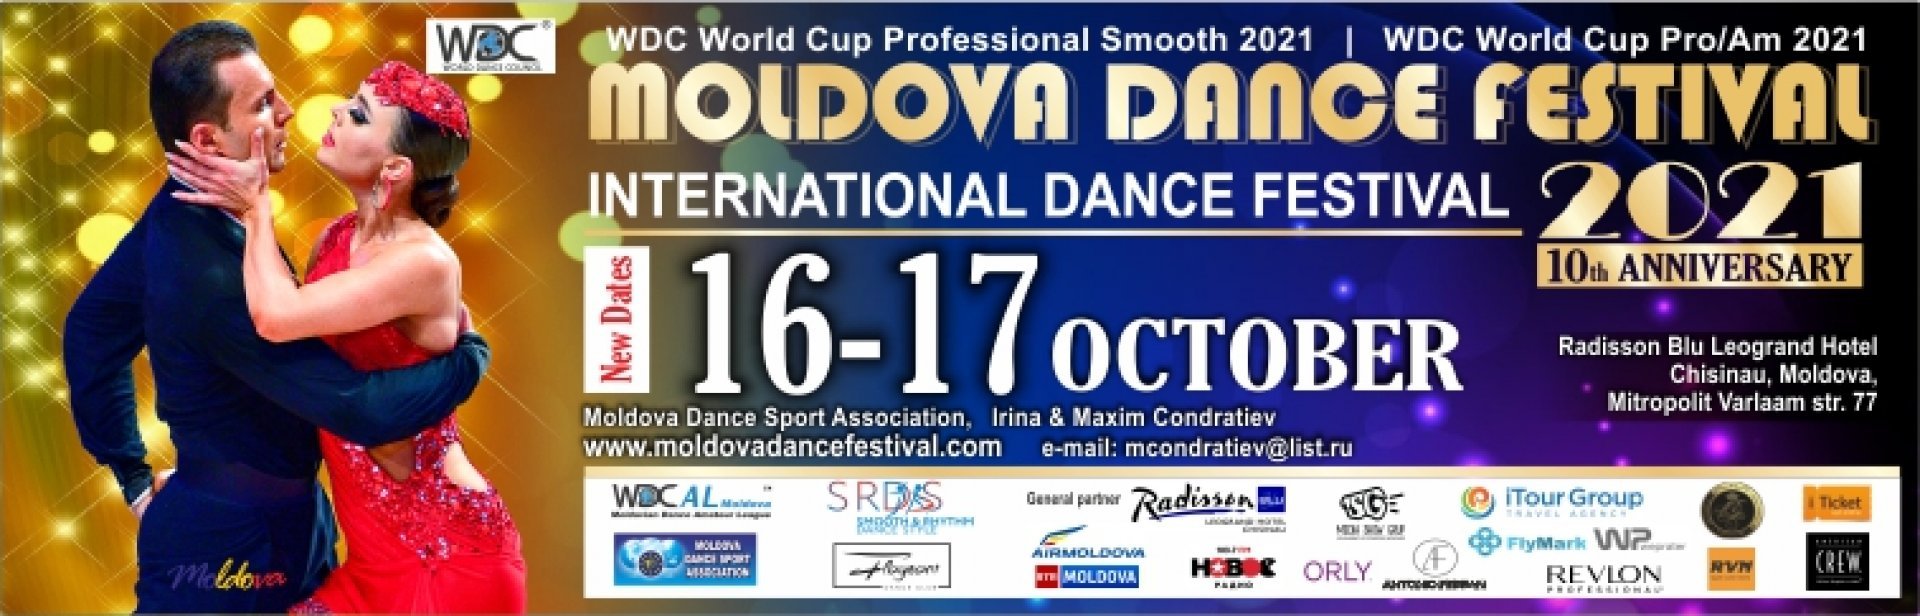 16 Octombrie 19:30-22:30 - Moldova Dance Festival 2021